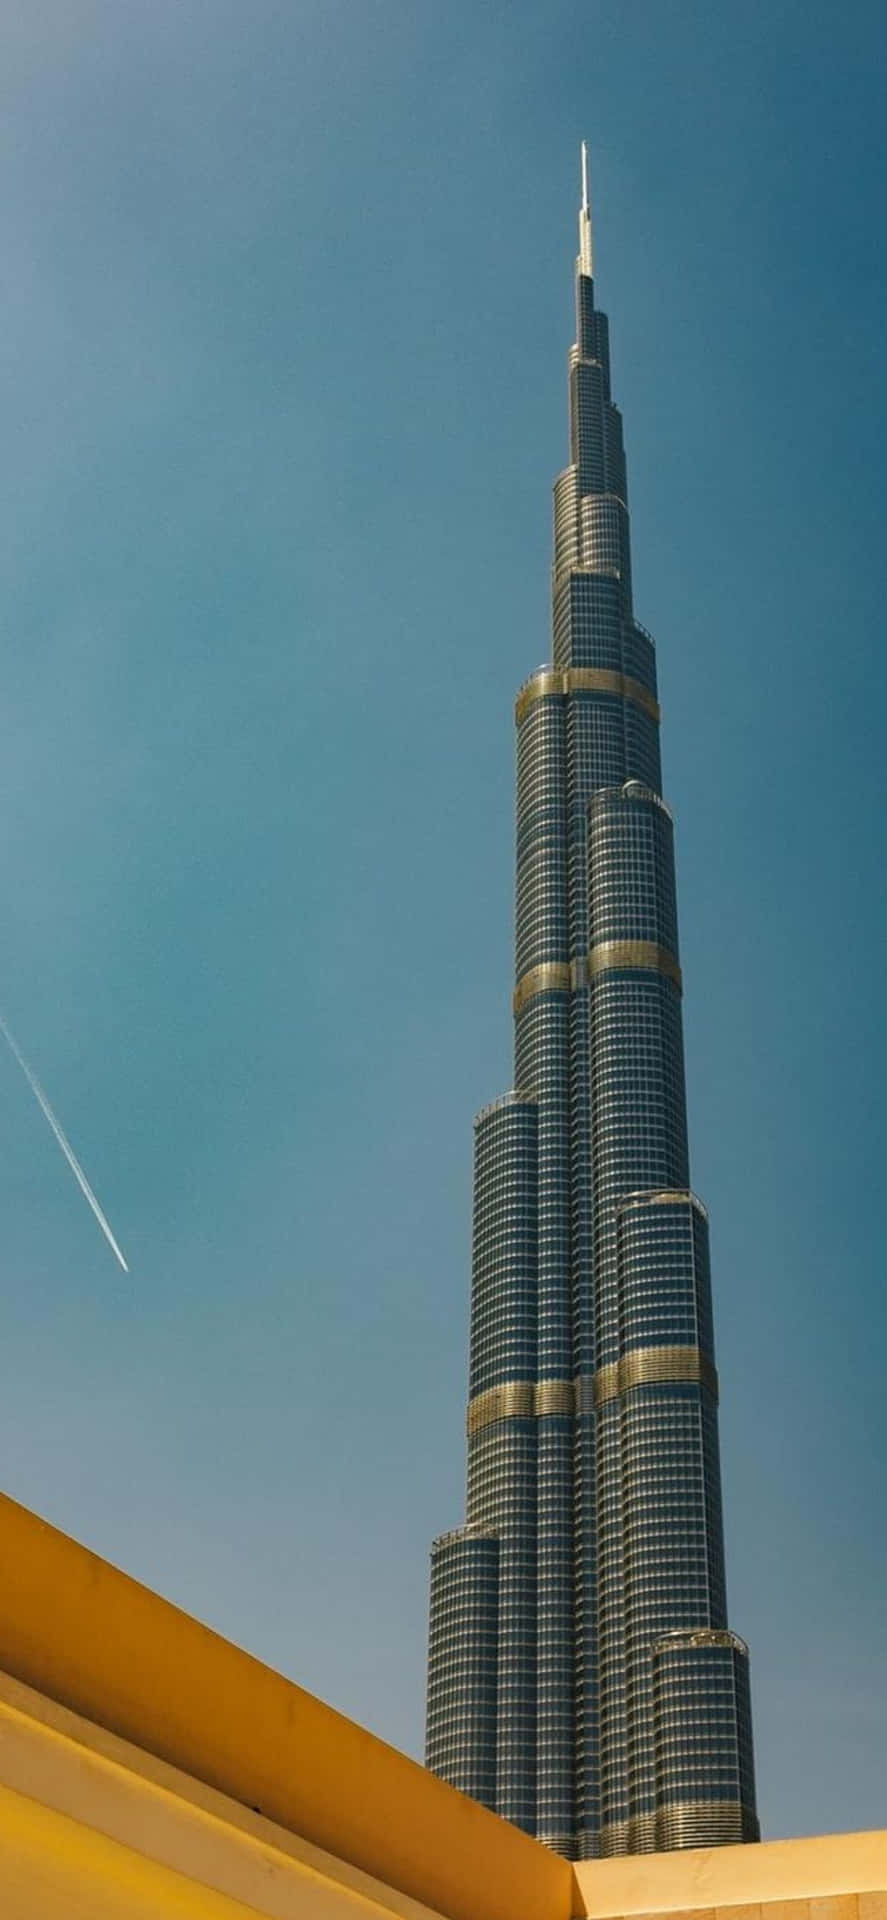 Burjkhalifa-tornet I Dubai